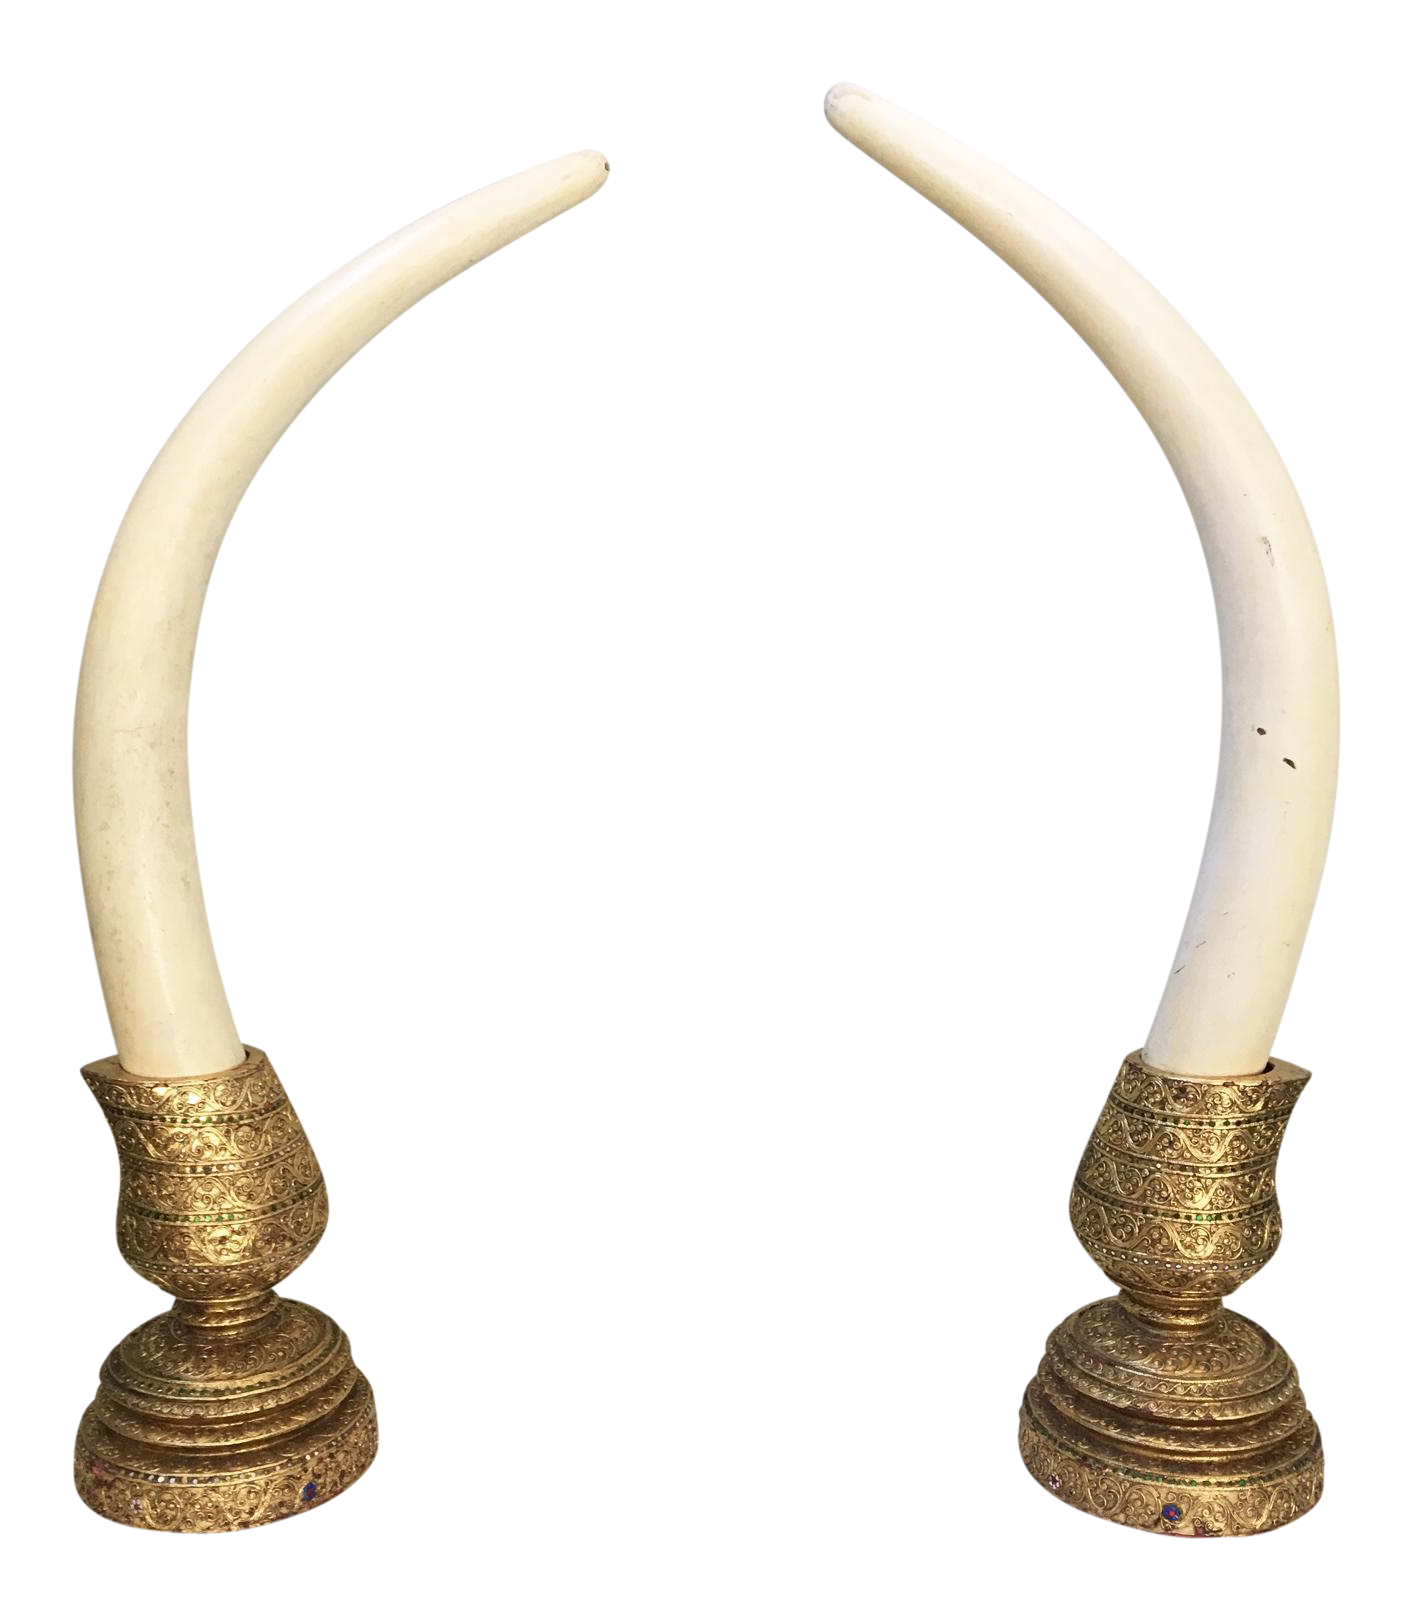 Pair of Monumental Decorative Faux Elephant Tusks